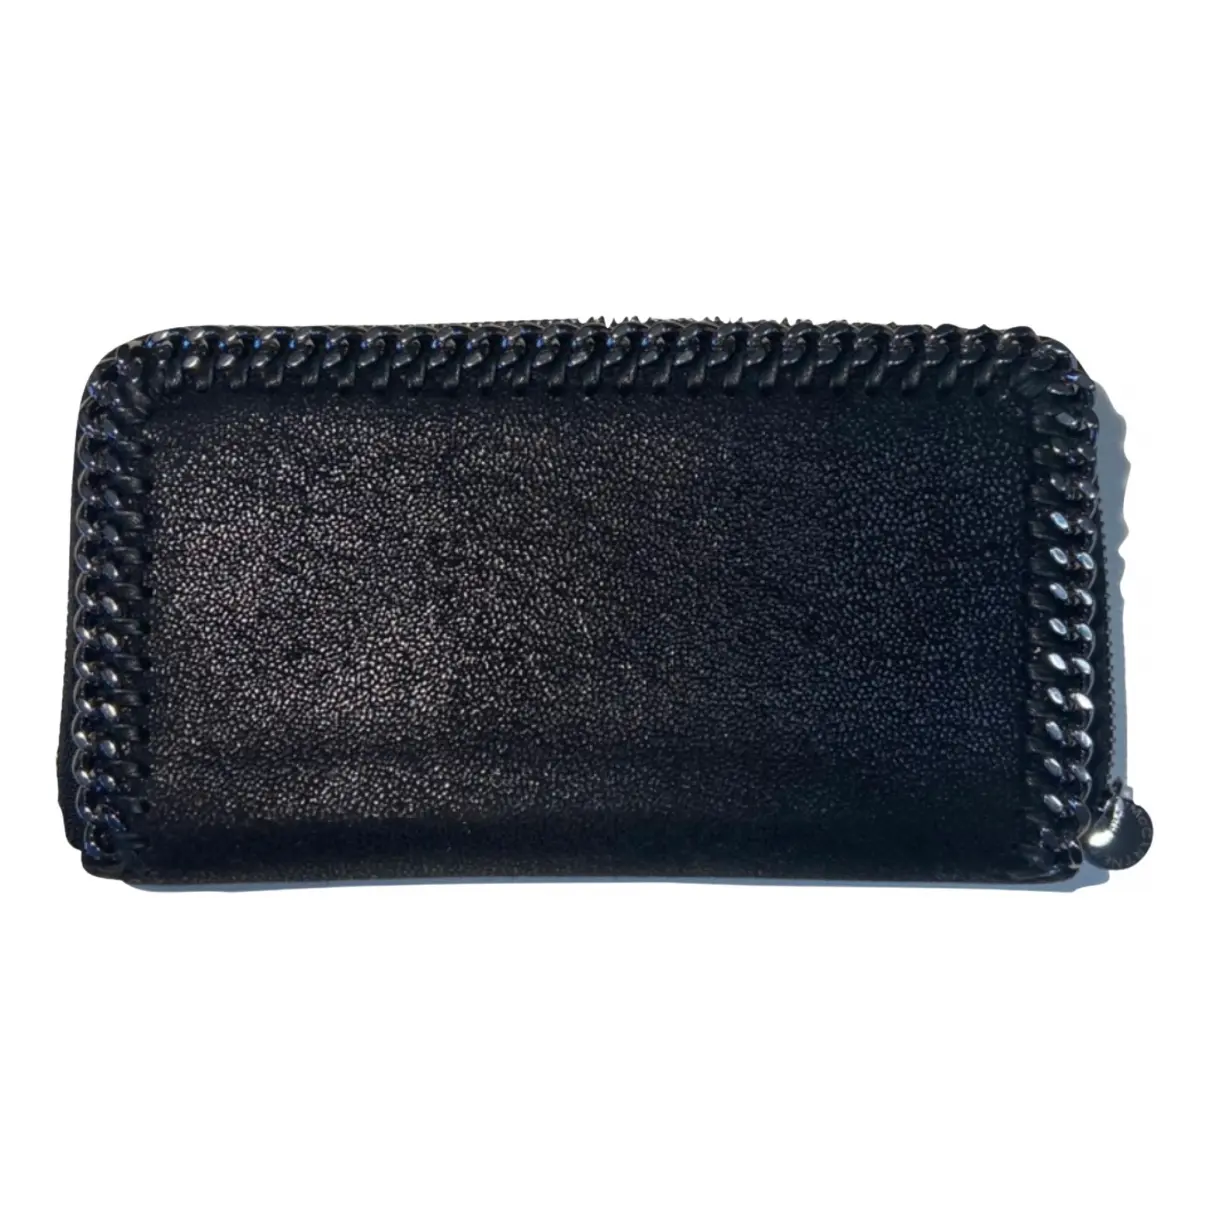 Vegan leather wallet Stella McCartney